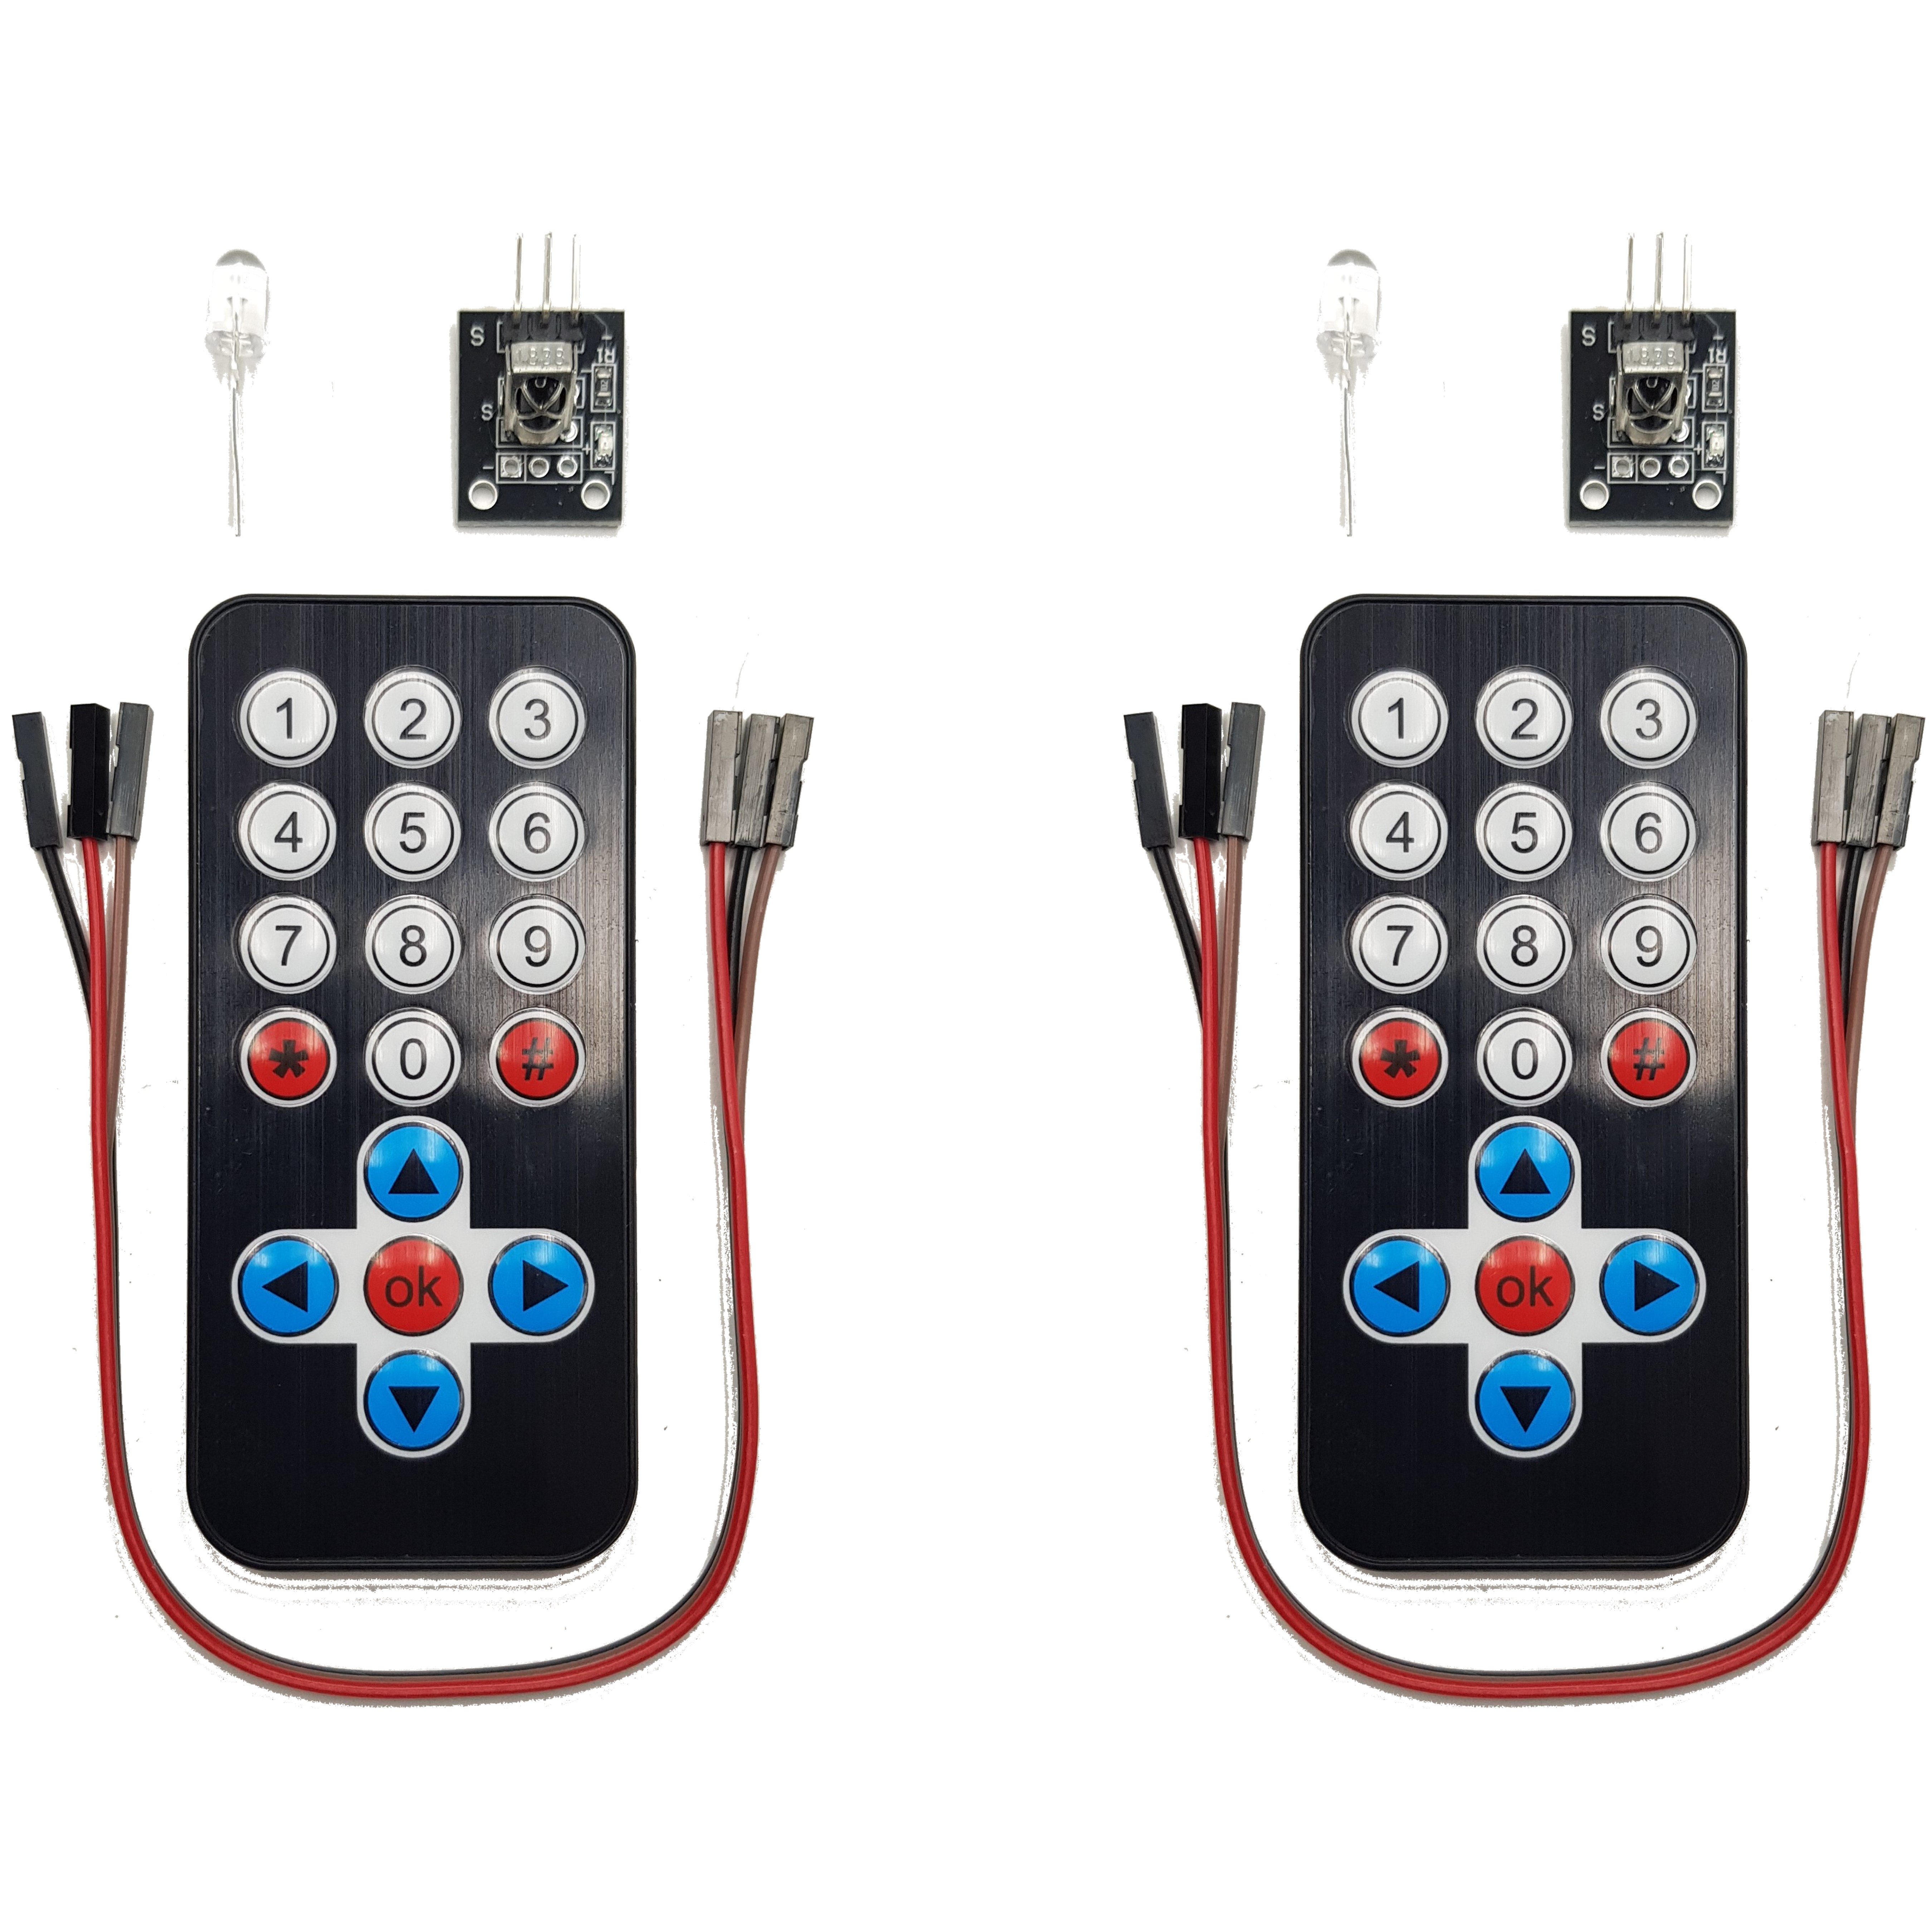 Infrared IR Remote Control Kit with 17-key Controller and Receiver for Arduino, ESP32, ESP8266, Raspberry Pi, 2 sets